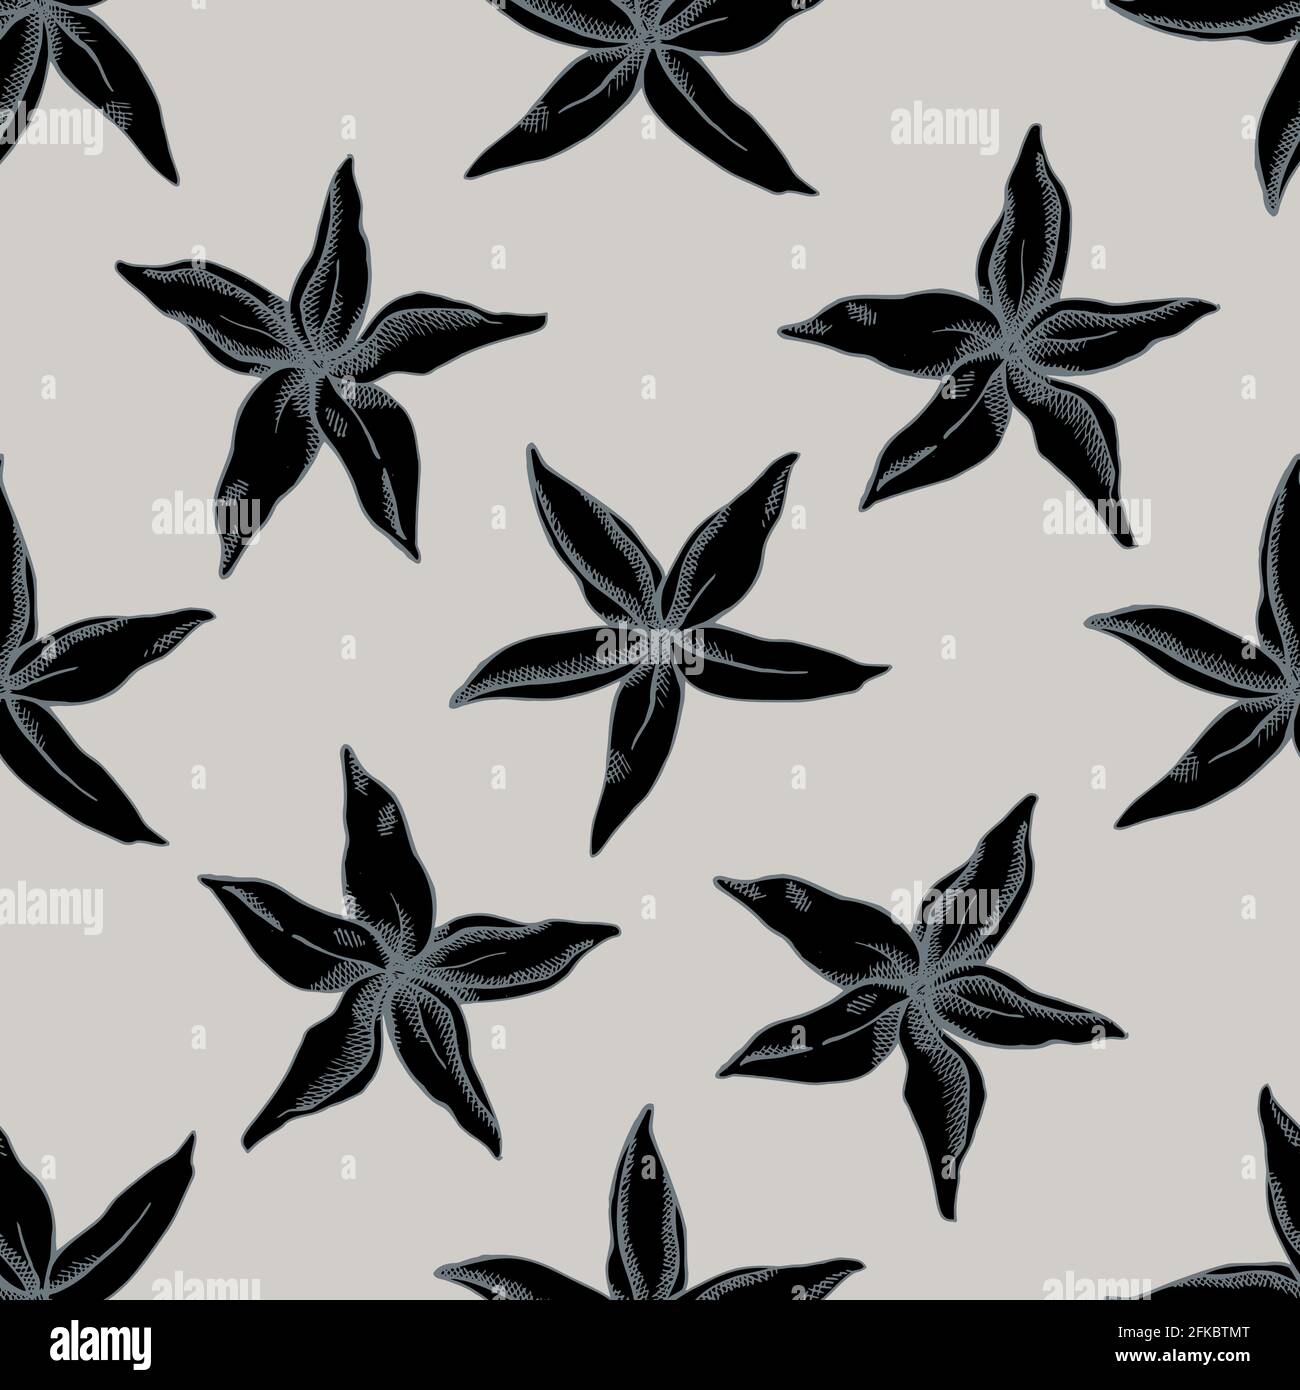 Seamless pattern with hand drawn stylized hancornia Stock Vector